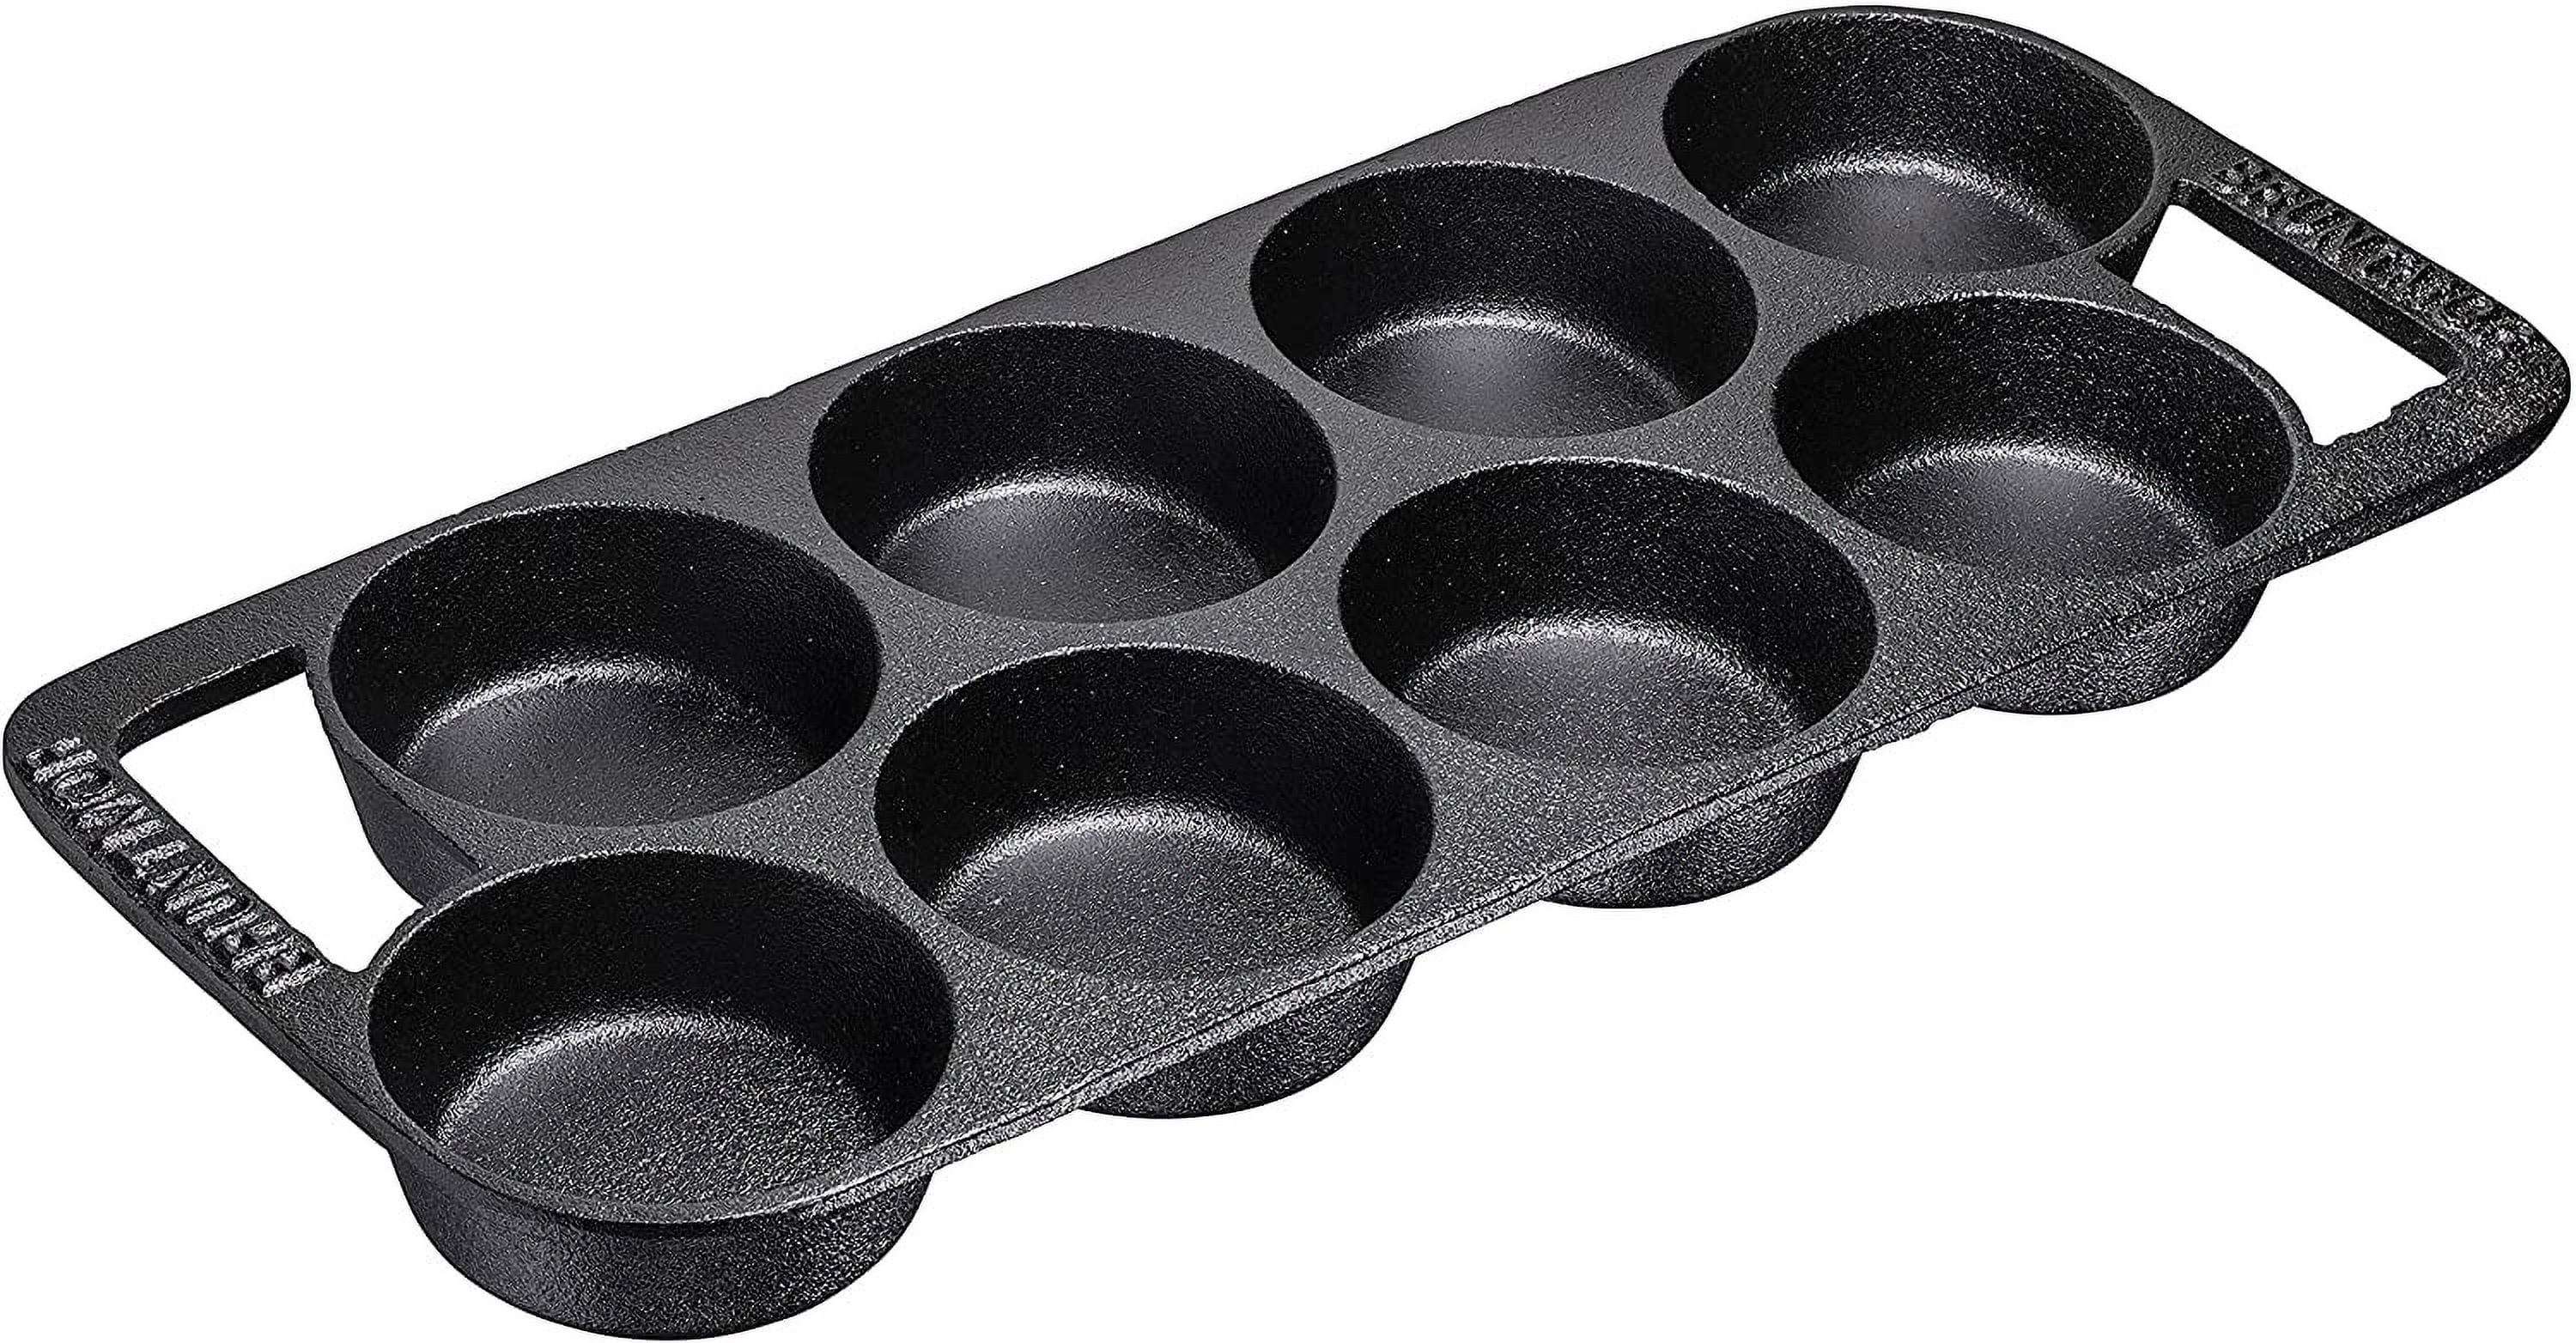 Bruntmor  Pre-Seasoned Cast Iron Cake Pan For Baking Biscuits - 8-Cup  Biscuit 